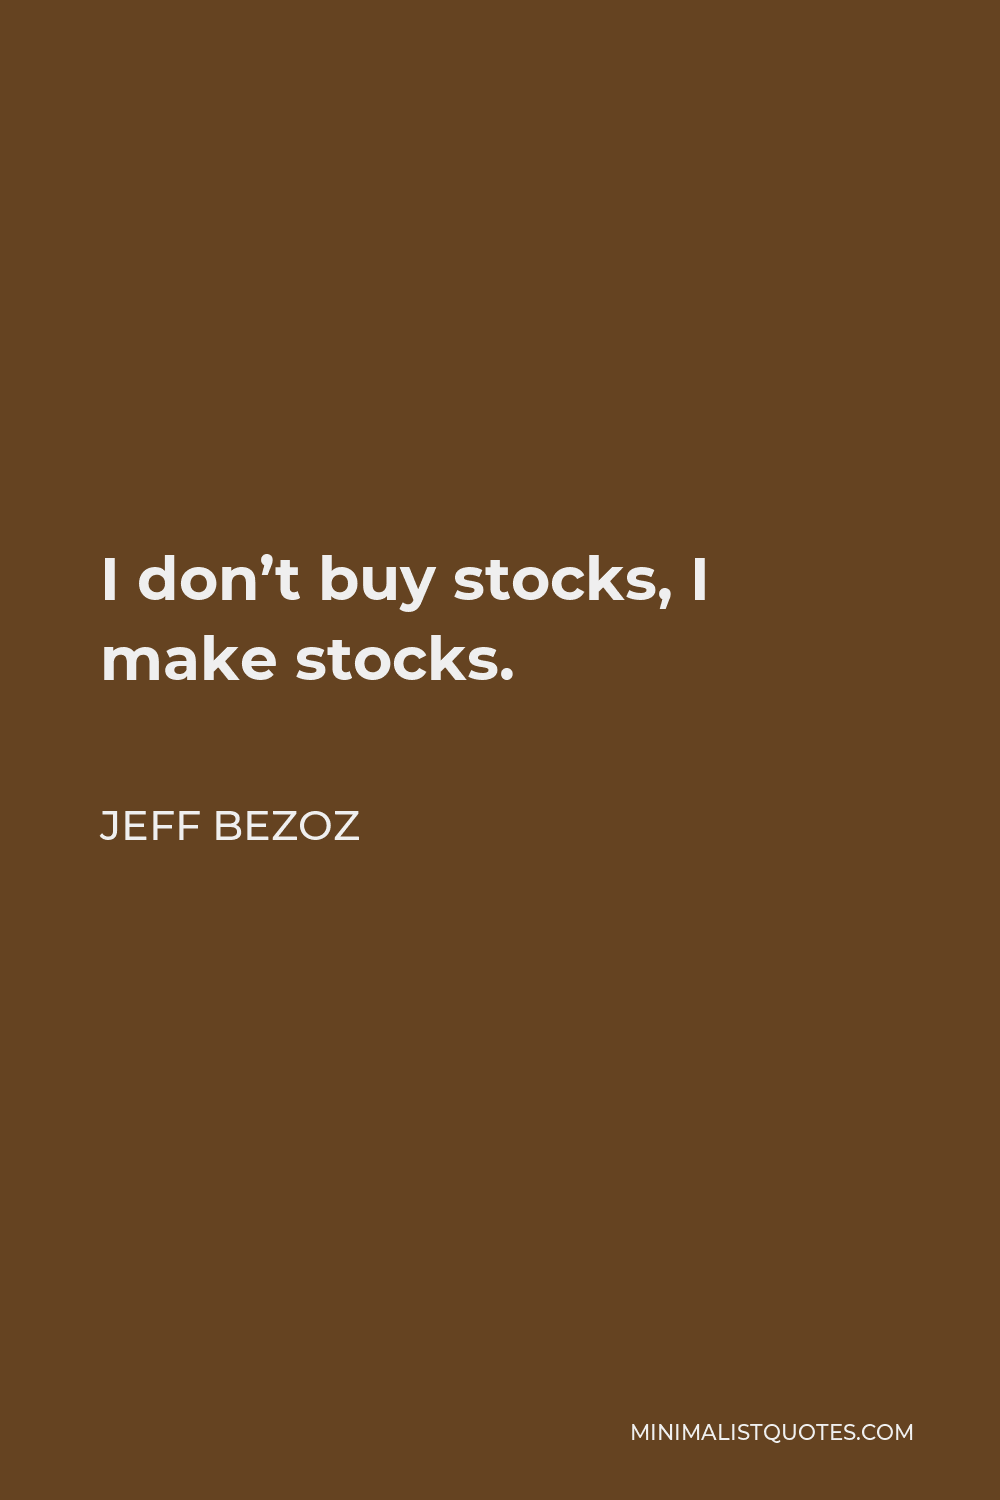 Jeff Bezoz Quote - I don’t buy stocks, I make stocks.